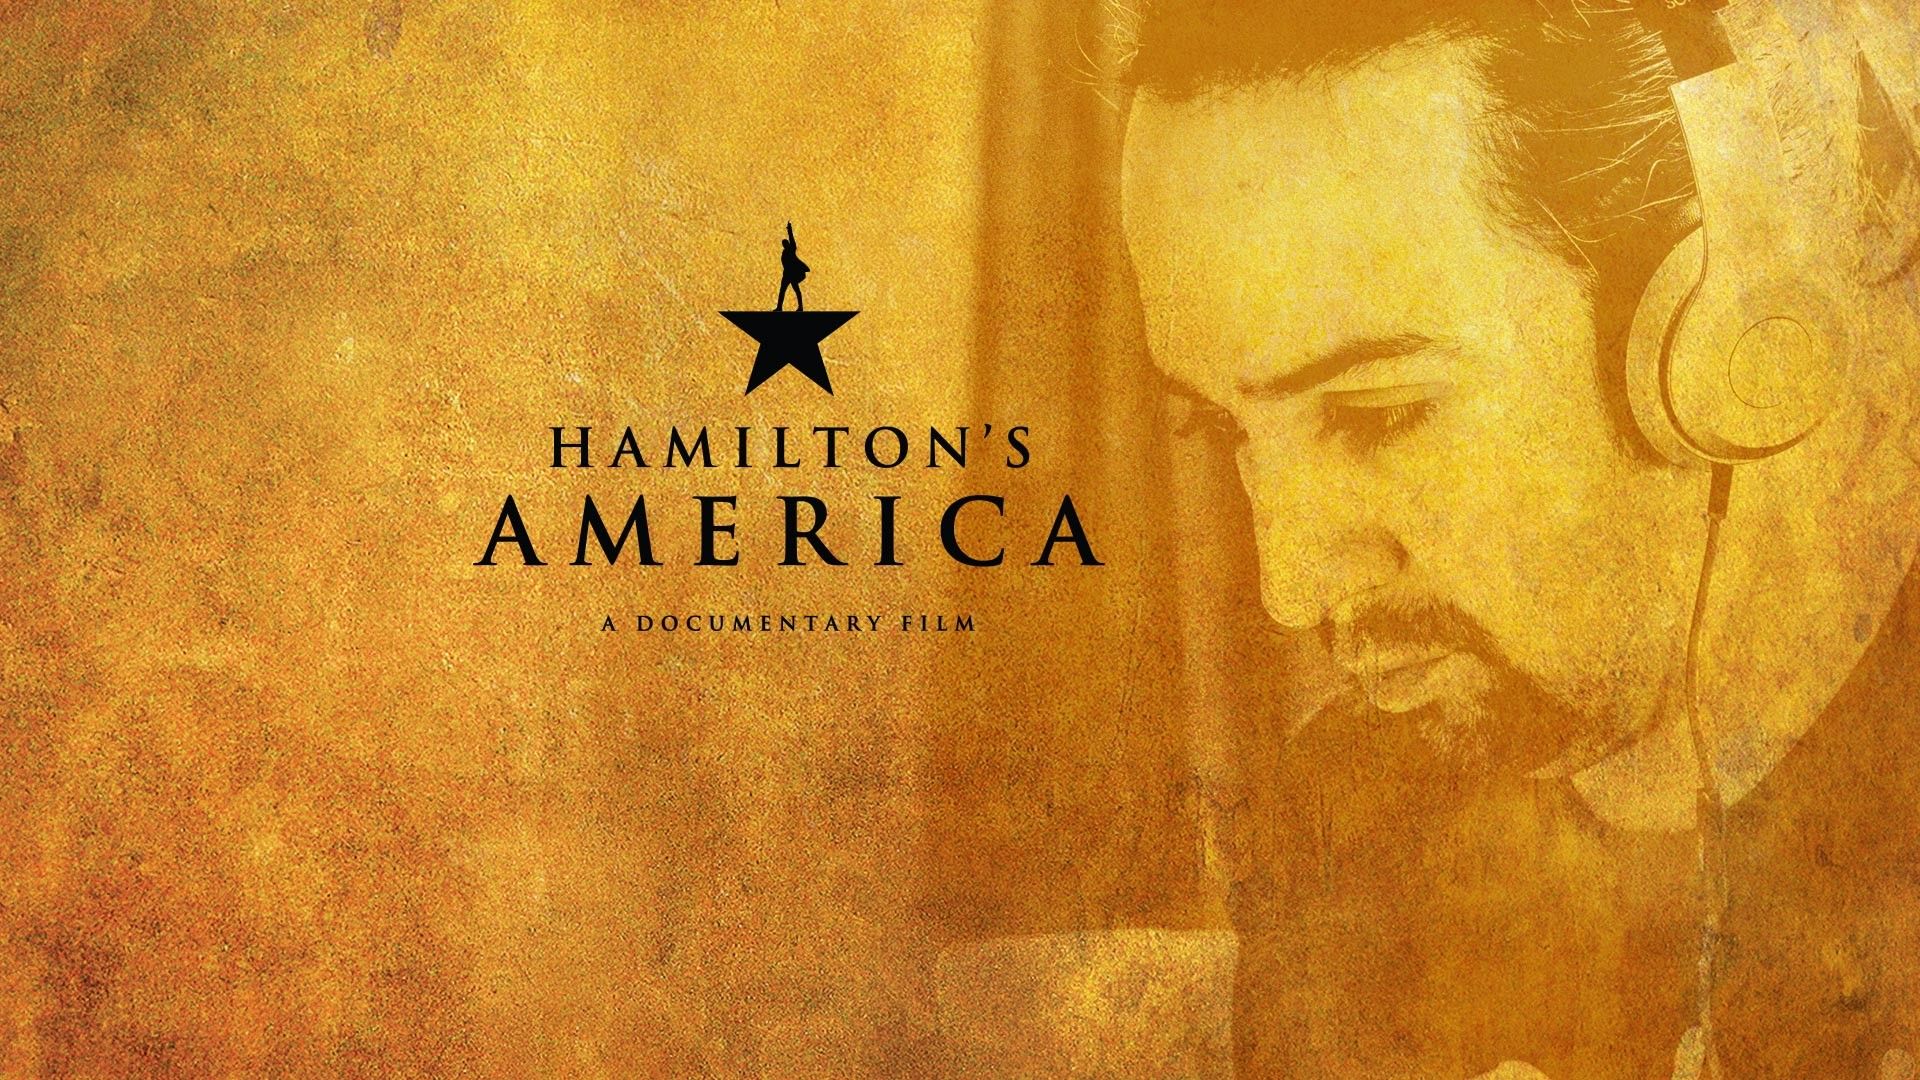 The poster for Hamilton's America, a documentary film. - Hamilton